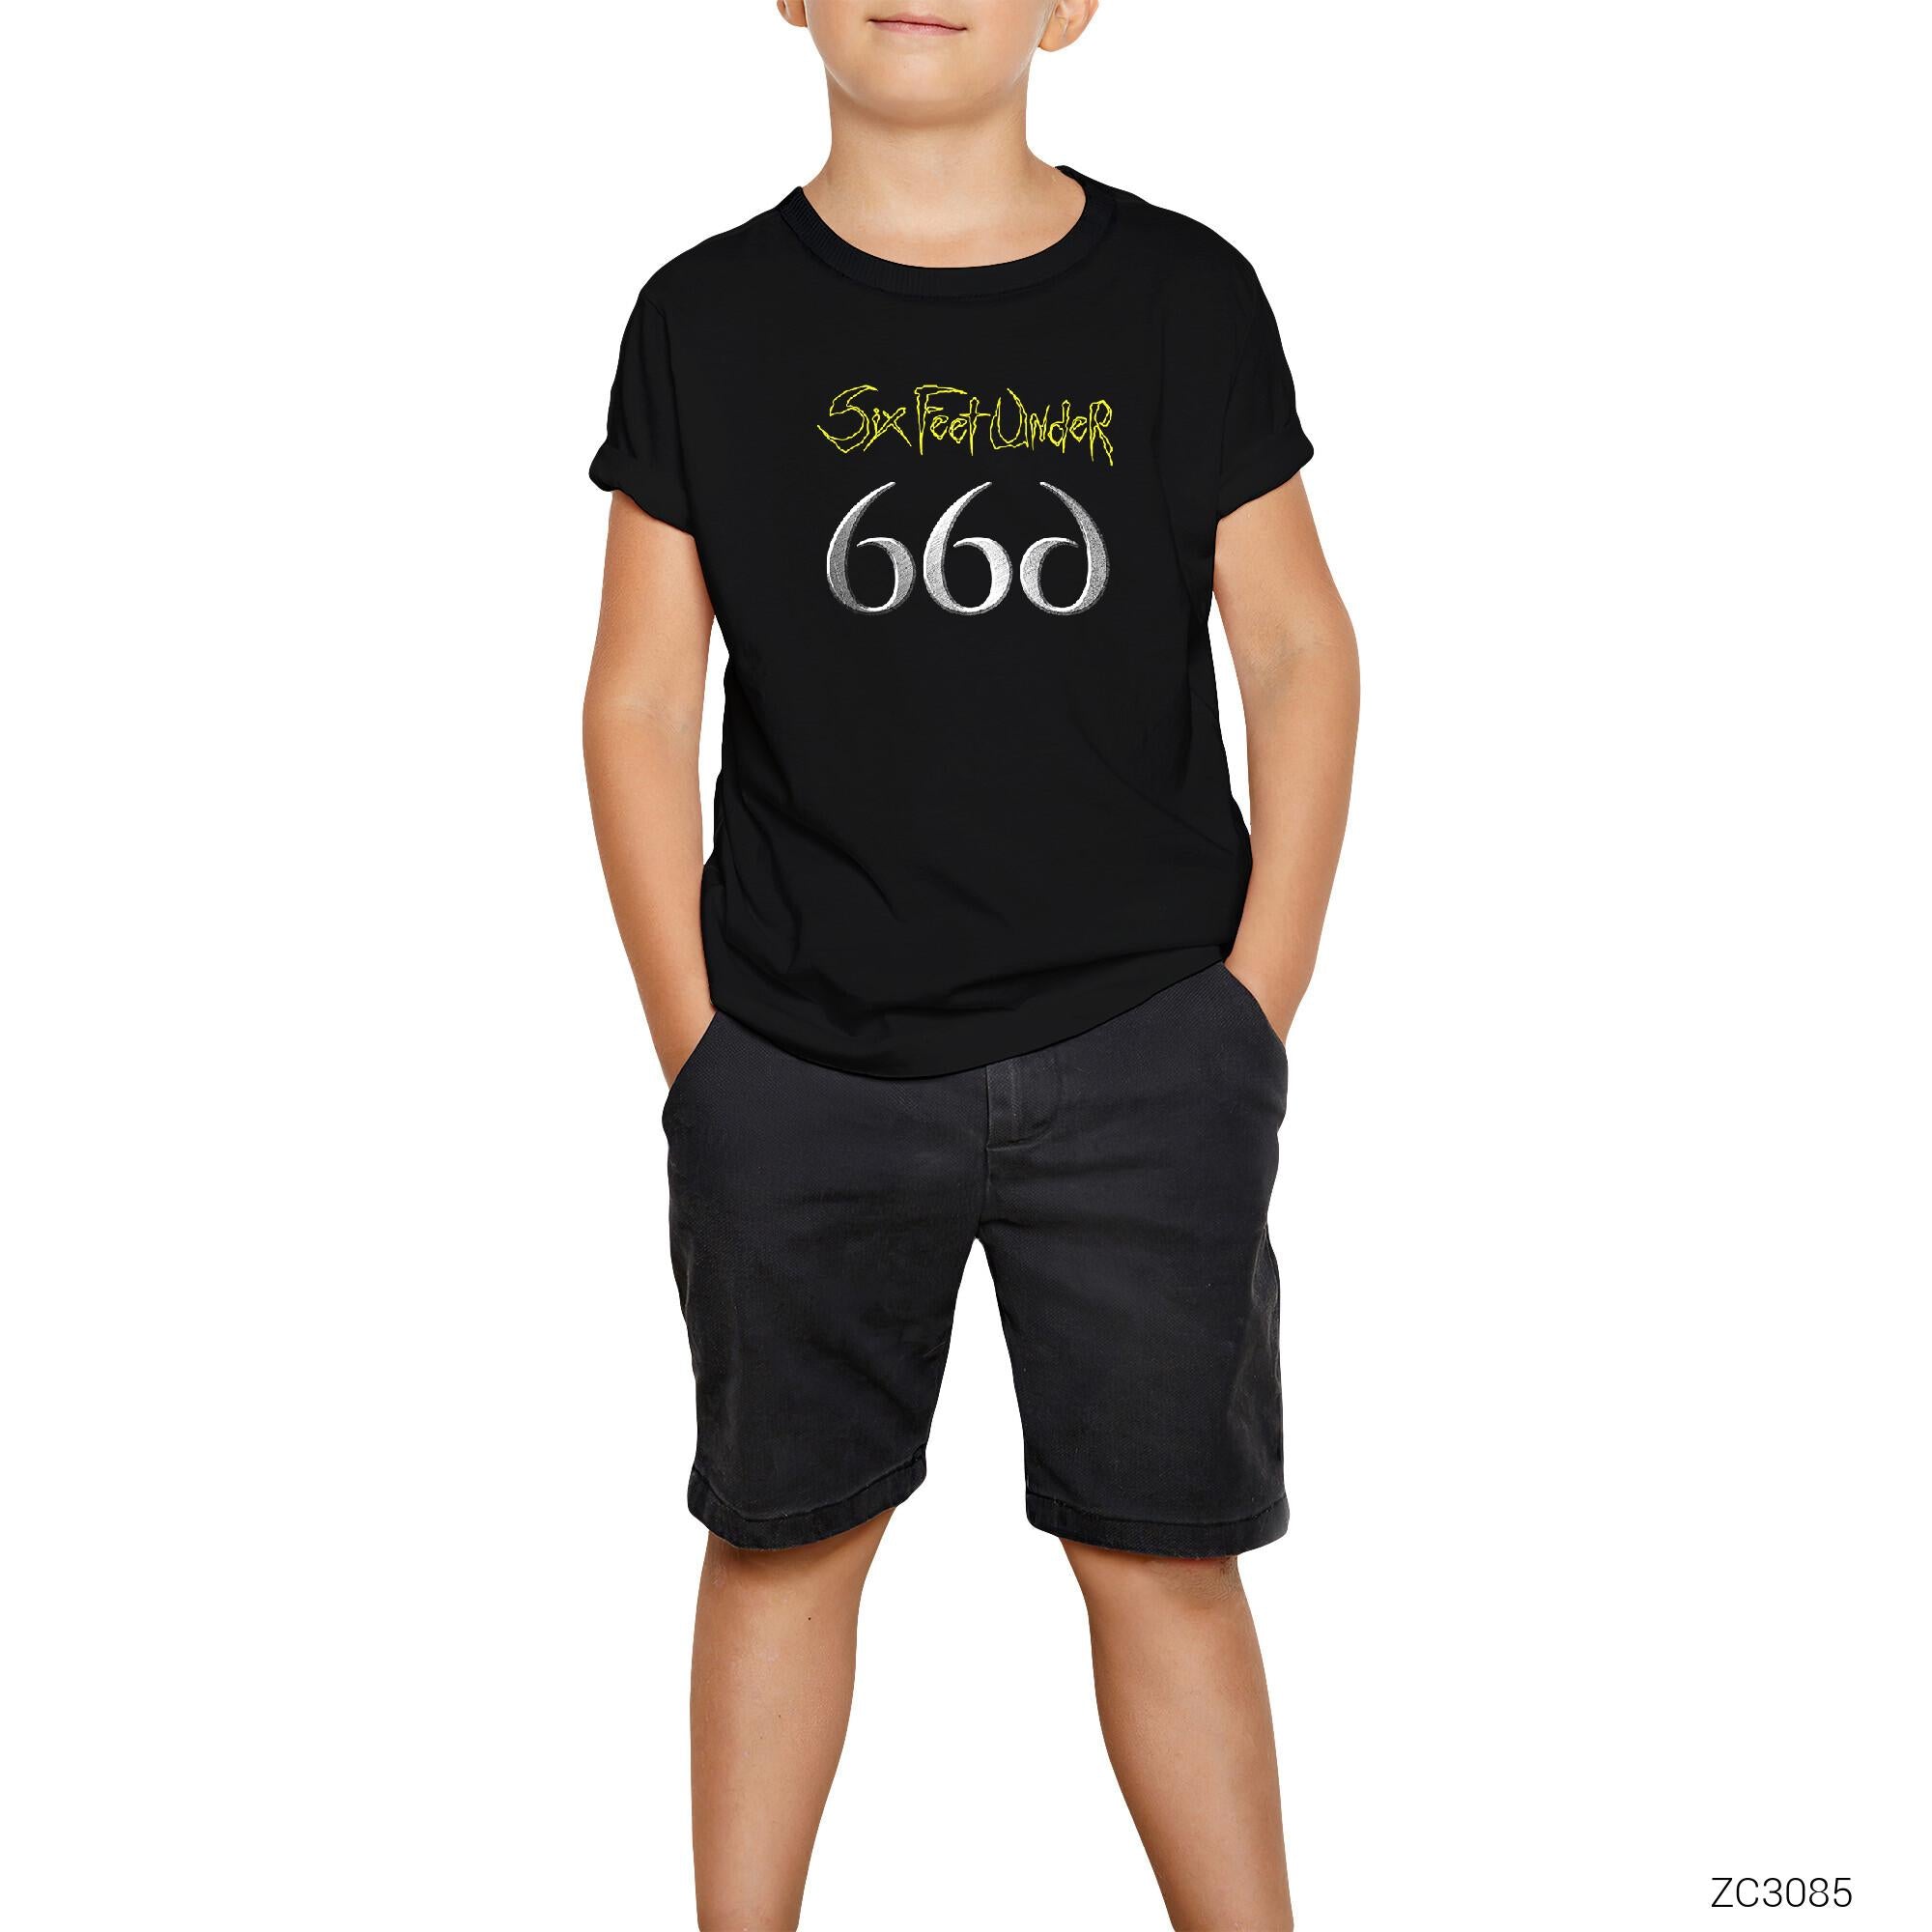 Six Feet Under 666 Siyah Çocuk Tişört